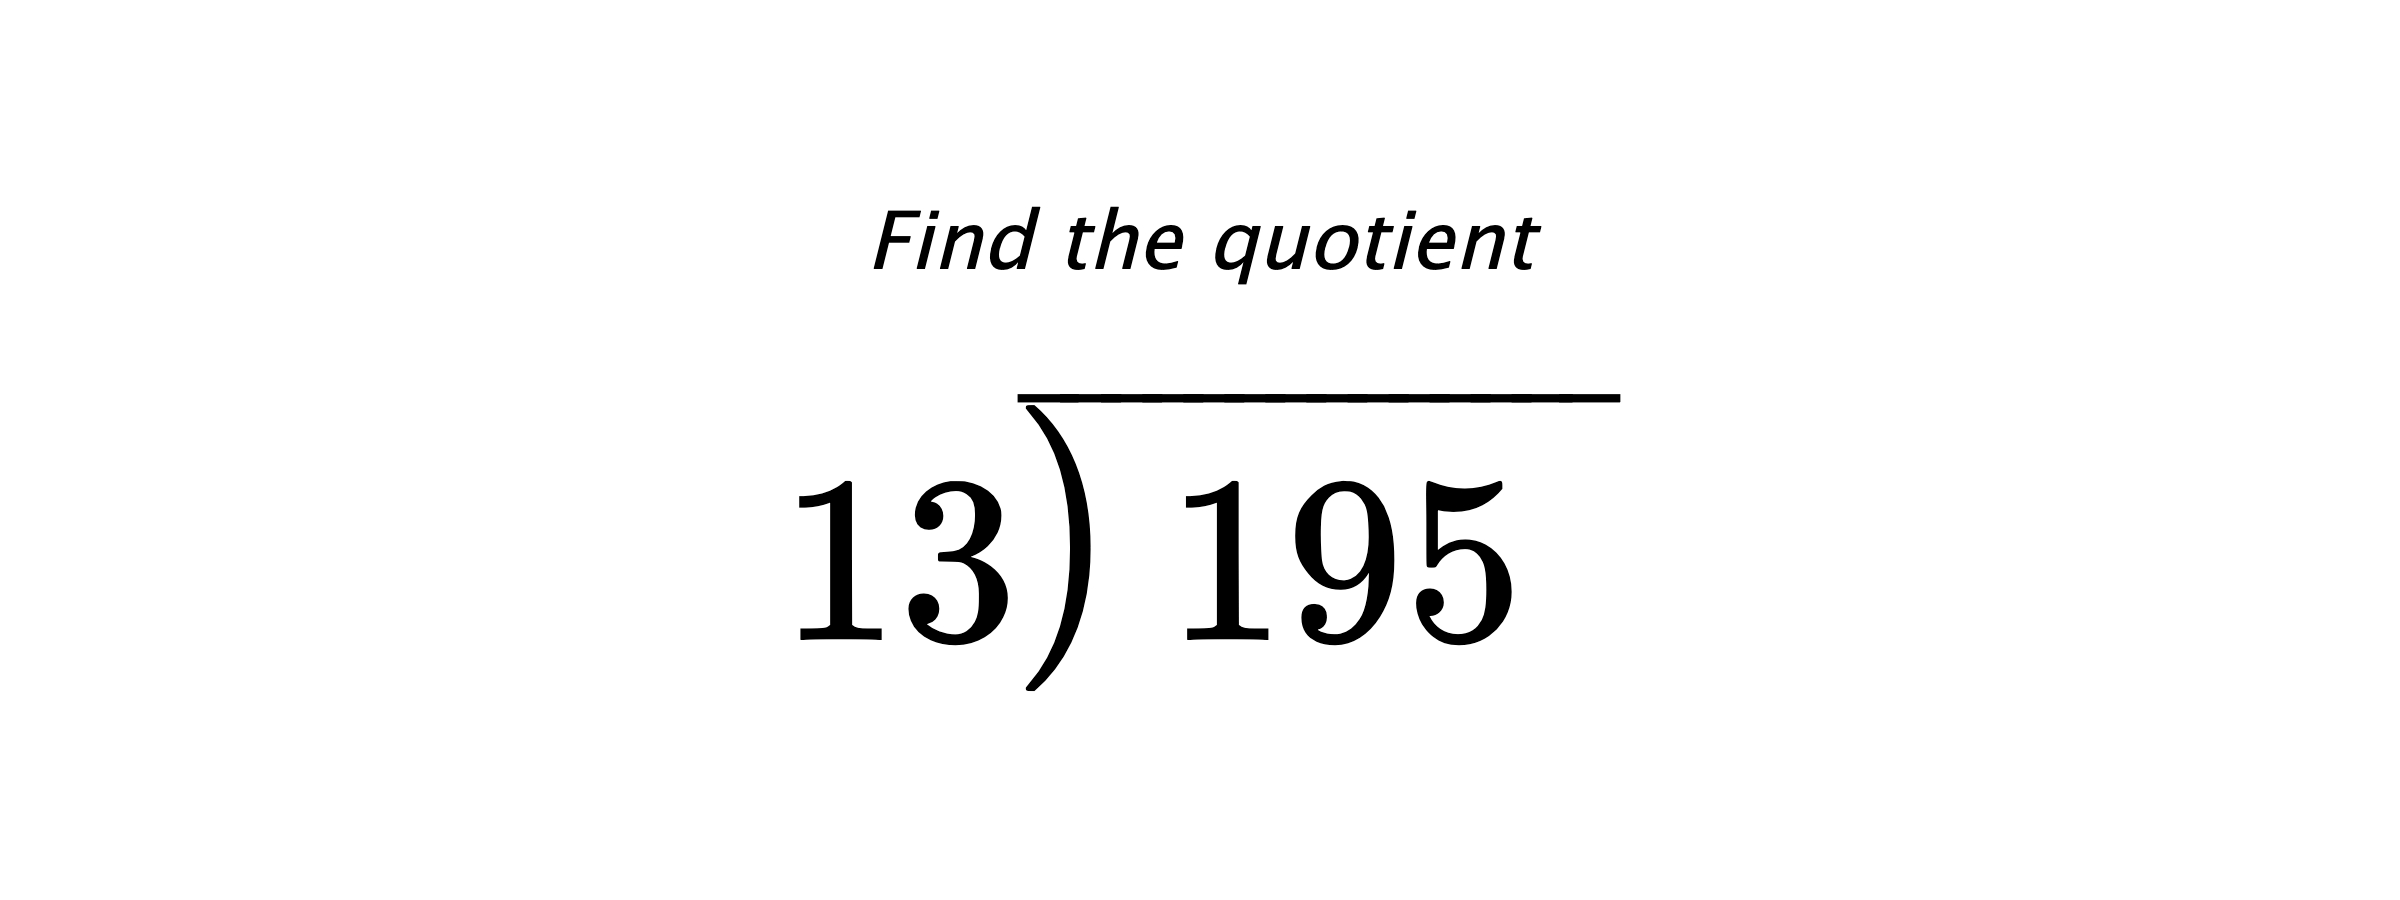 Find the quotient $ 13{\overline{\smash{\raise.3ex\hbox{$\big)$}}\,195\phantom{)}}} $